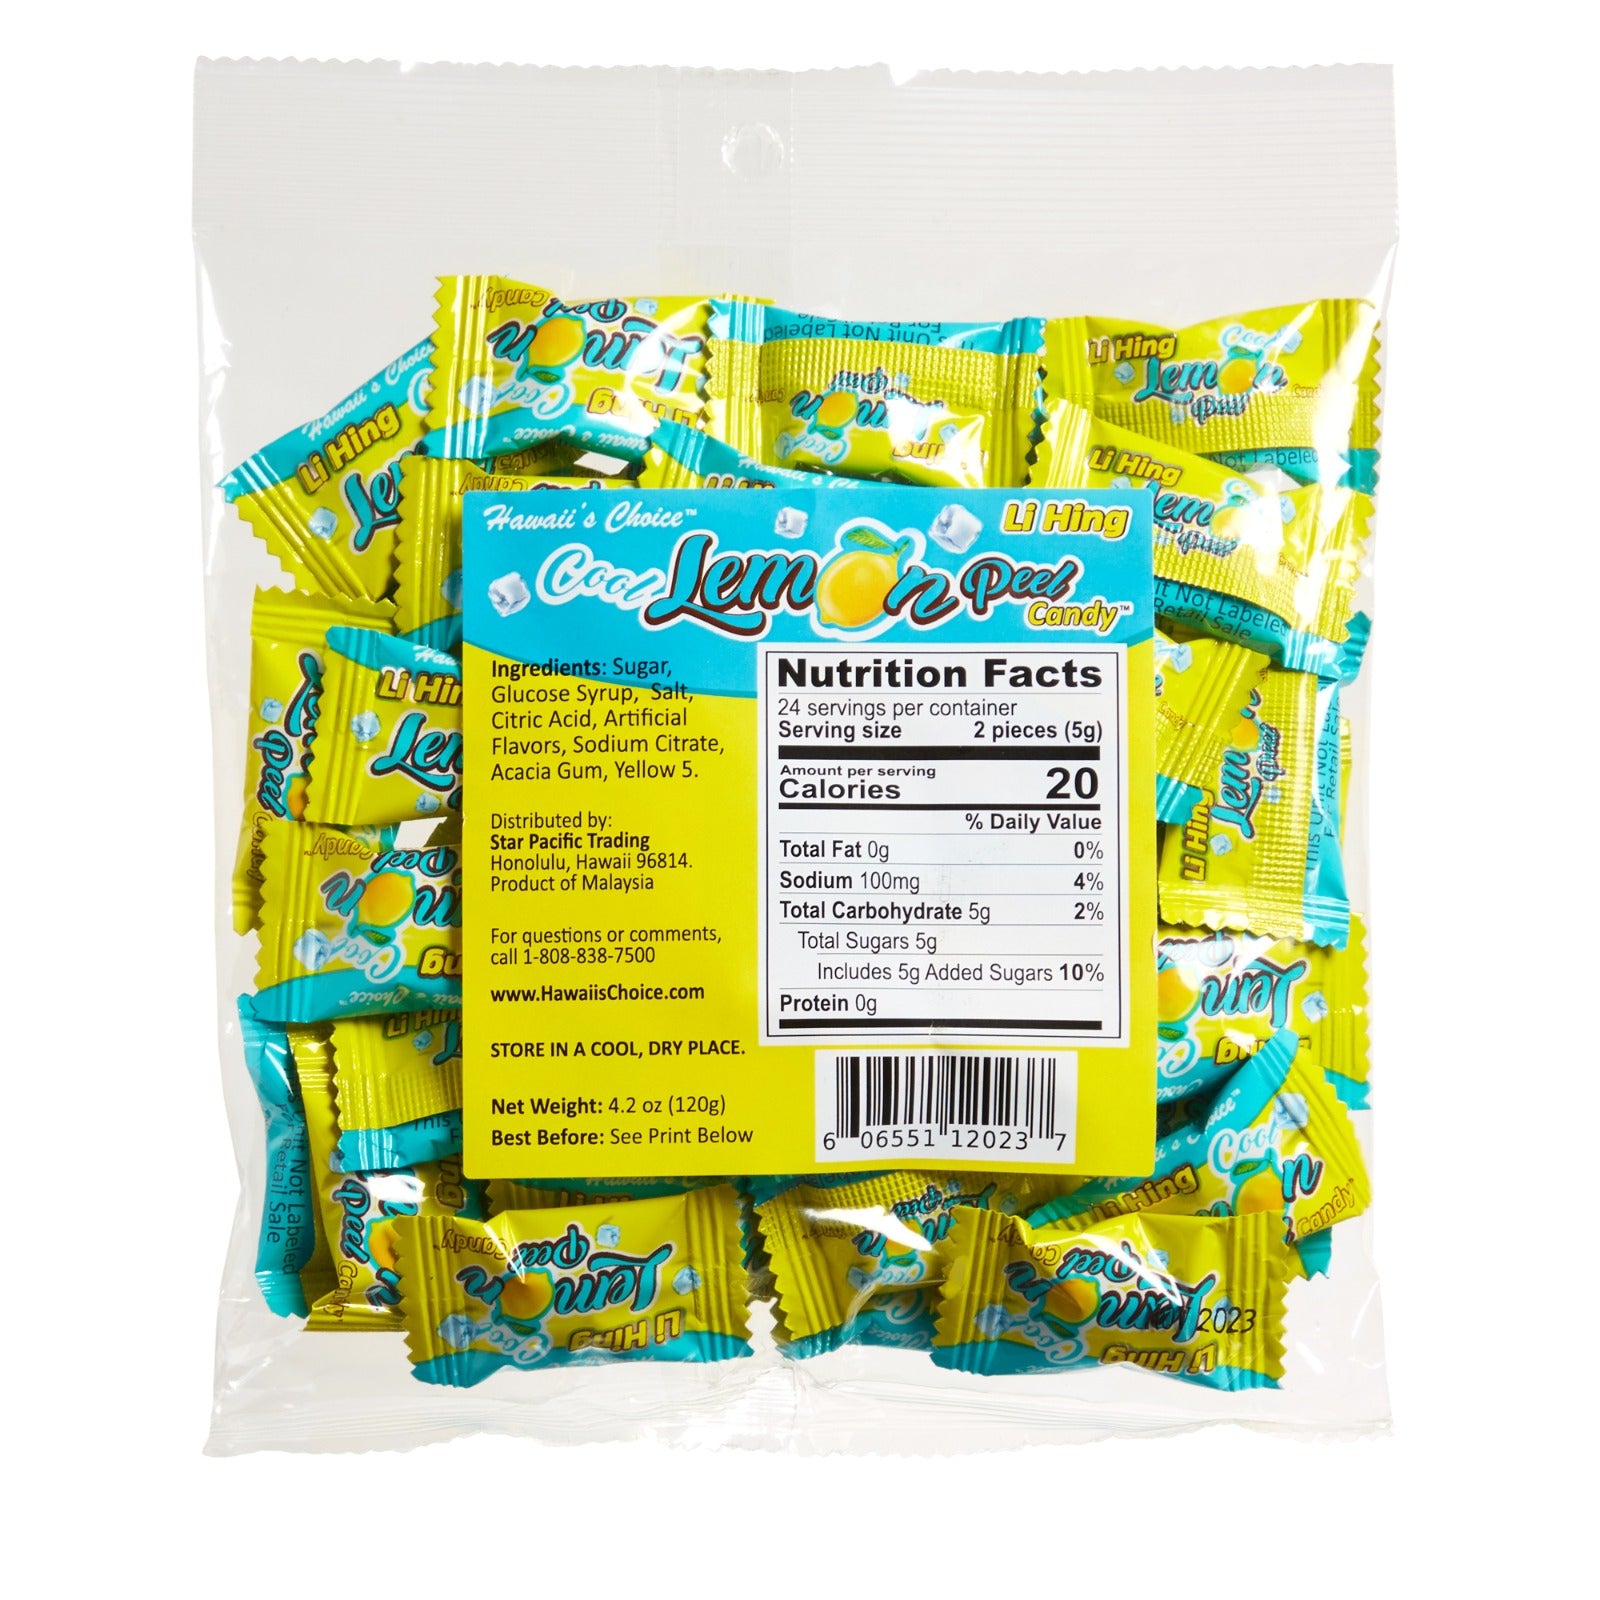 Hawaii's Choice Li Hing Hawaiian Hard Candies - Individually Wrapped Li Hing Cool Lemon Peel Candy 4.2 oz (120g) Bag - 6 Pack Reg. $6.38/bag, 10% Special@ $5.74/bag (USD)